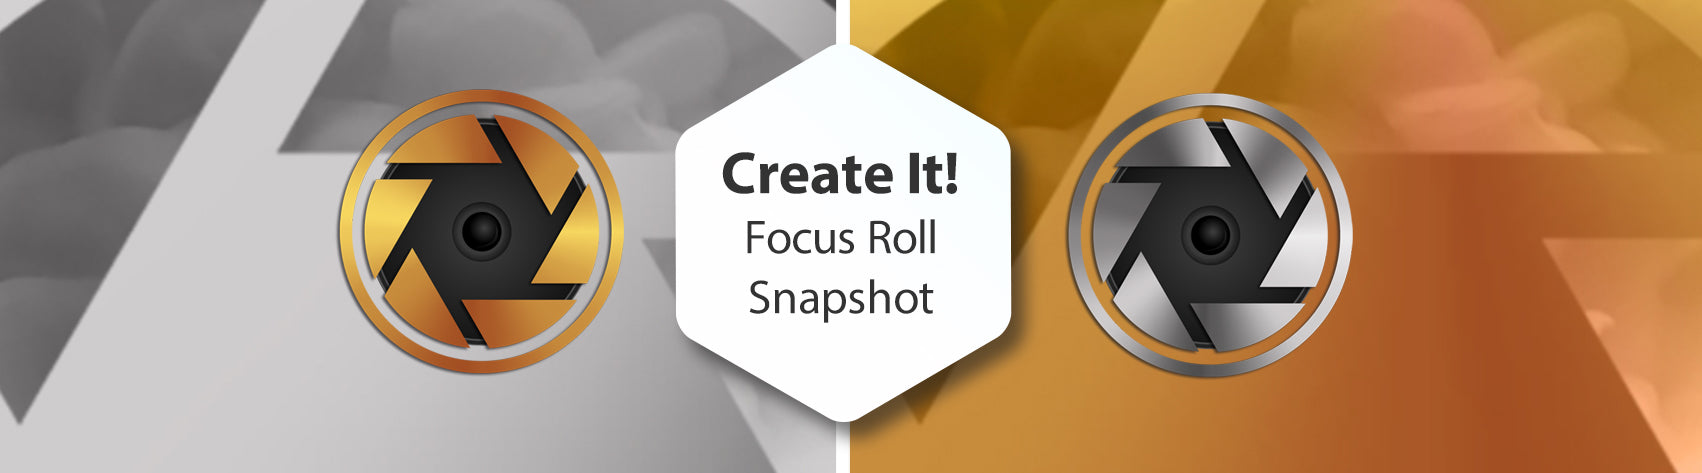 Create It! Focus Roll Snapshot